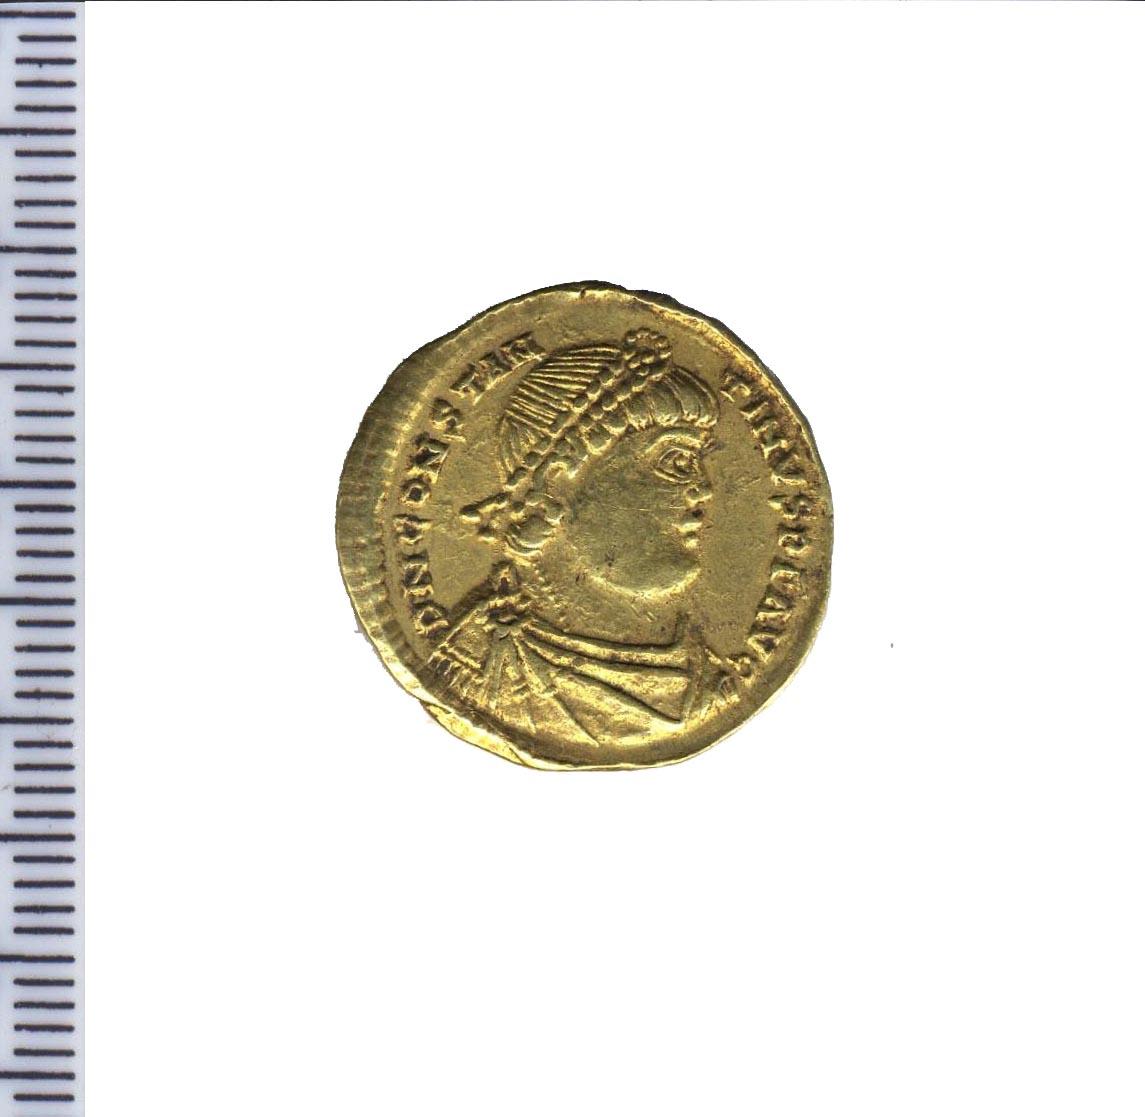 moneta - solido - produzione romana tardoimperiale (sec. IV d.C)